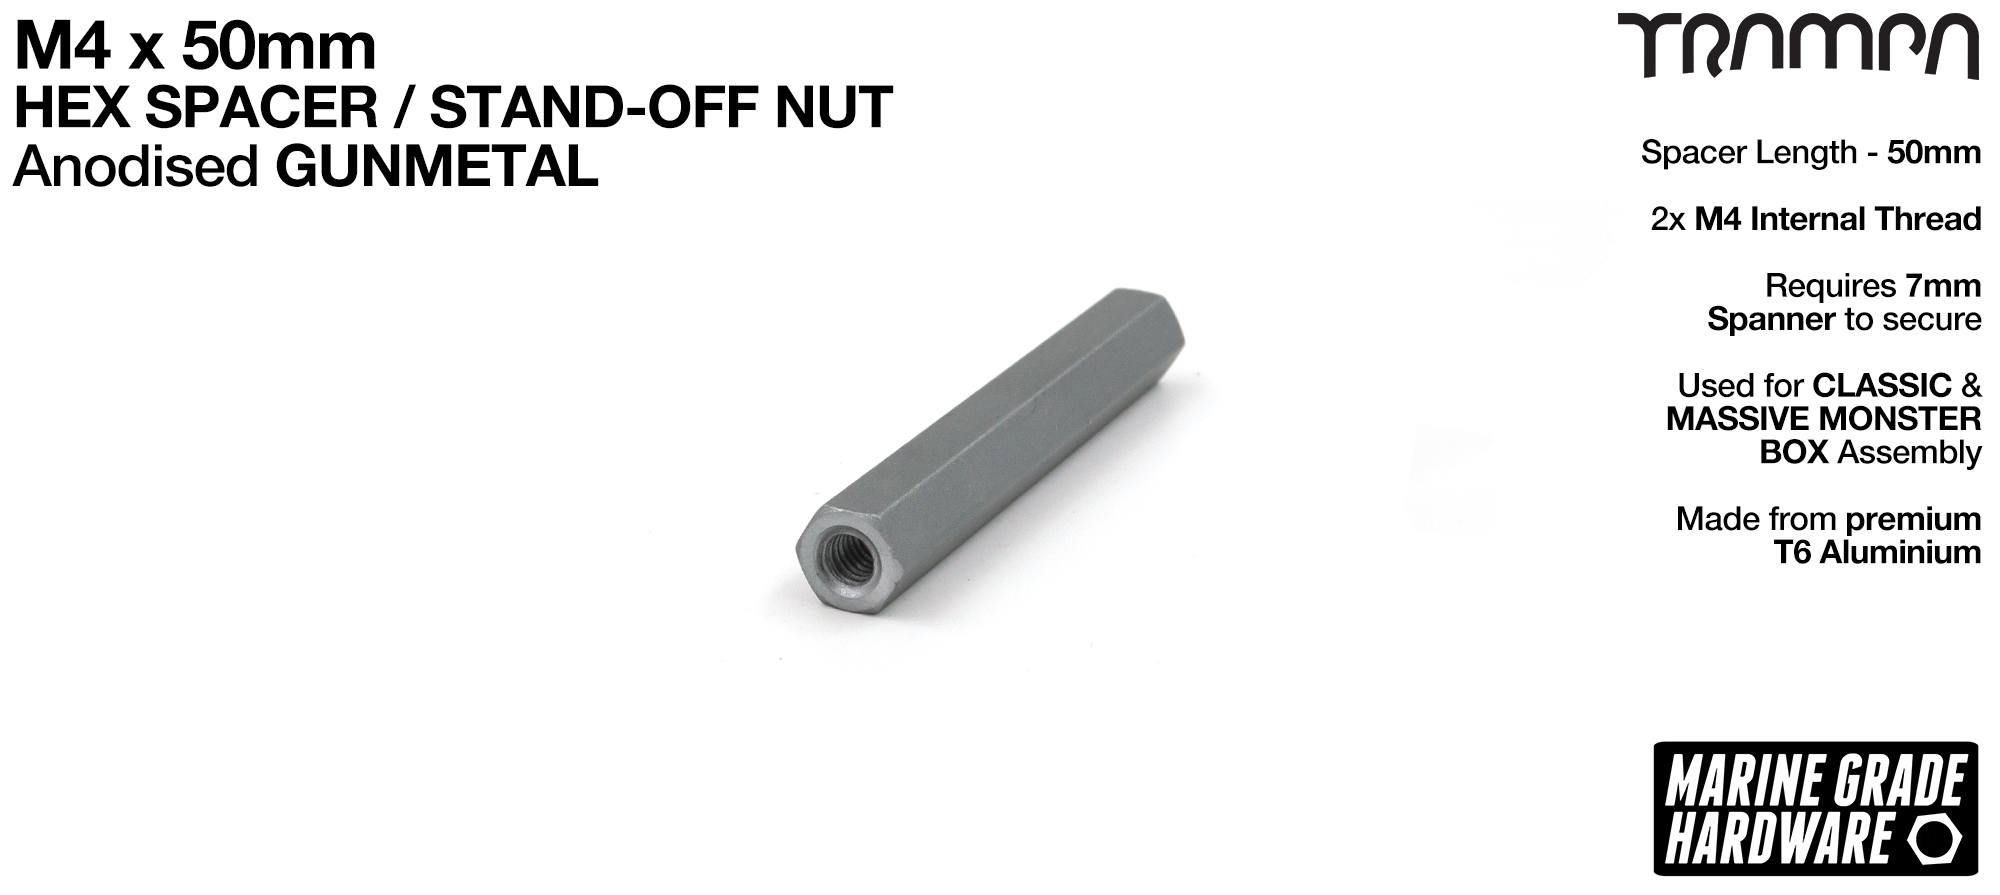 M4 x 50mm Aluminium Threaded HEX Spacer Nut used for assembling the MONSTER Battery Boxes - GUNMETAL